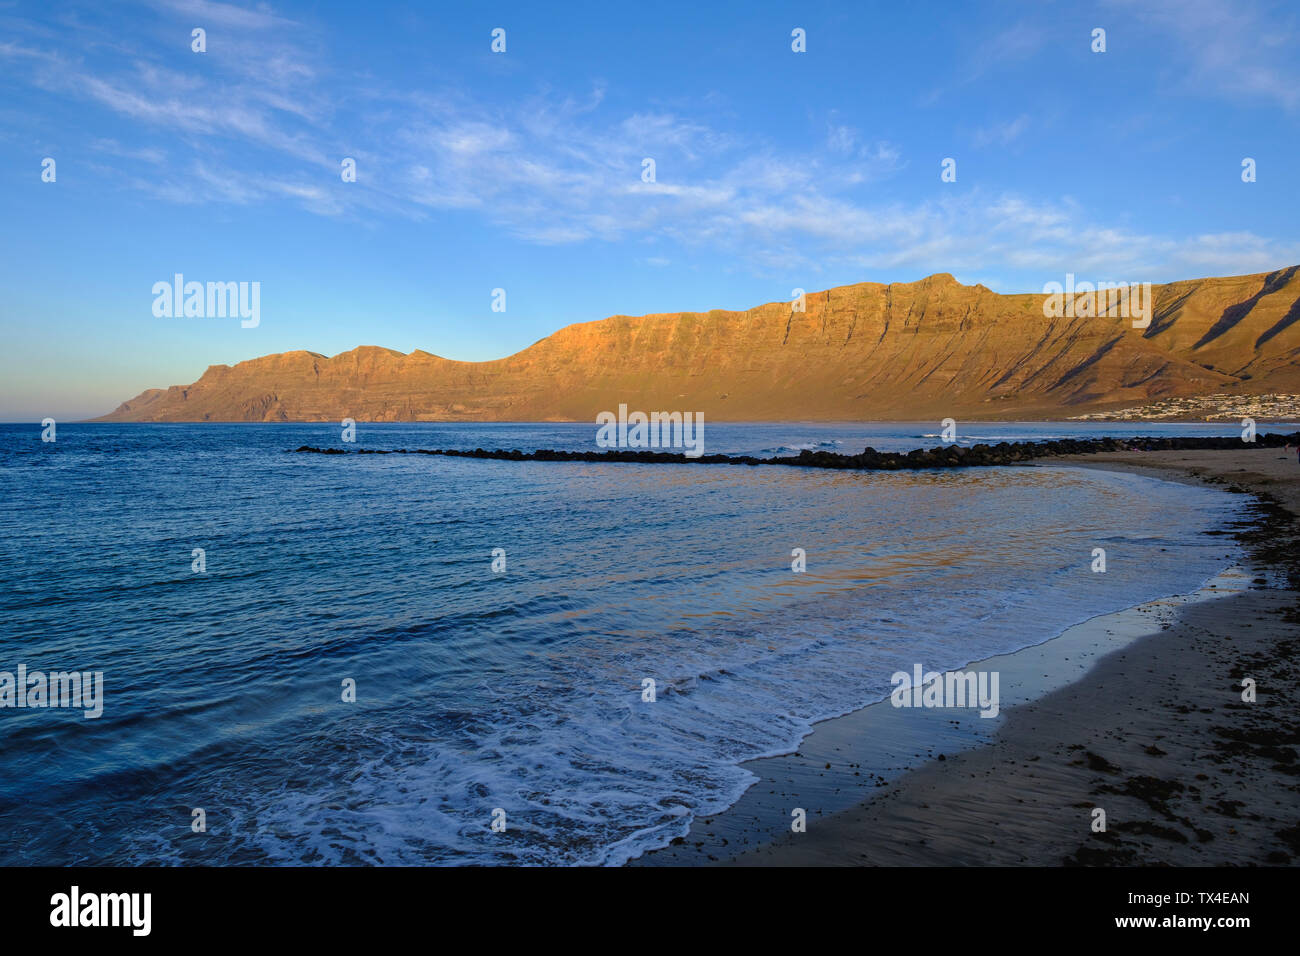 Spain, Canary Islands, Lanzarote, Caleta de Famara, Risco de Famara in the evening light Stock Photo